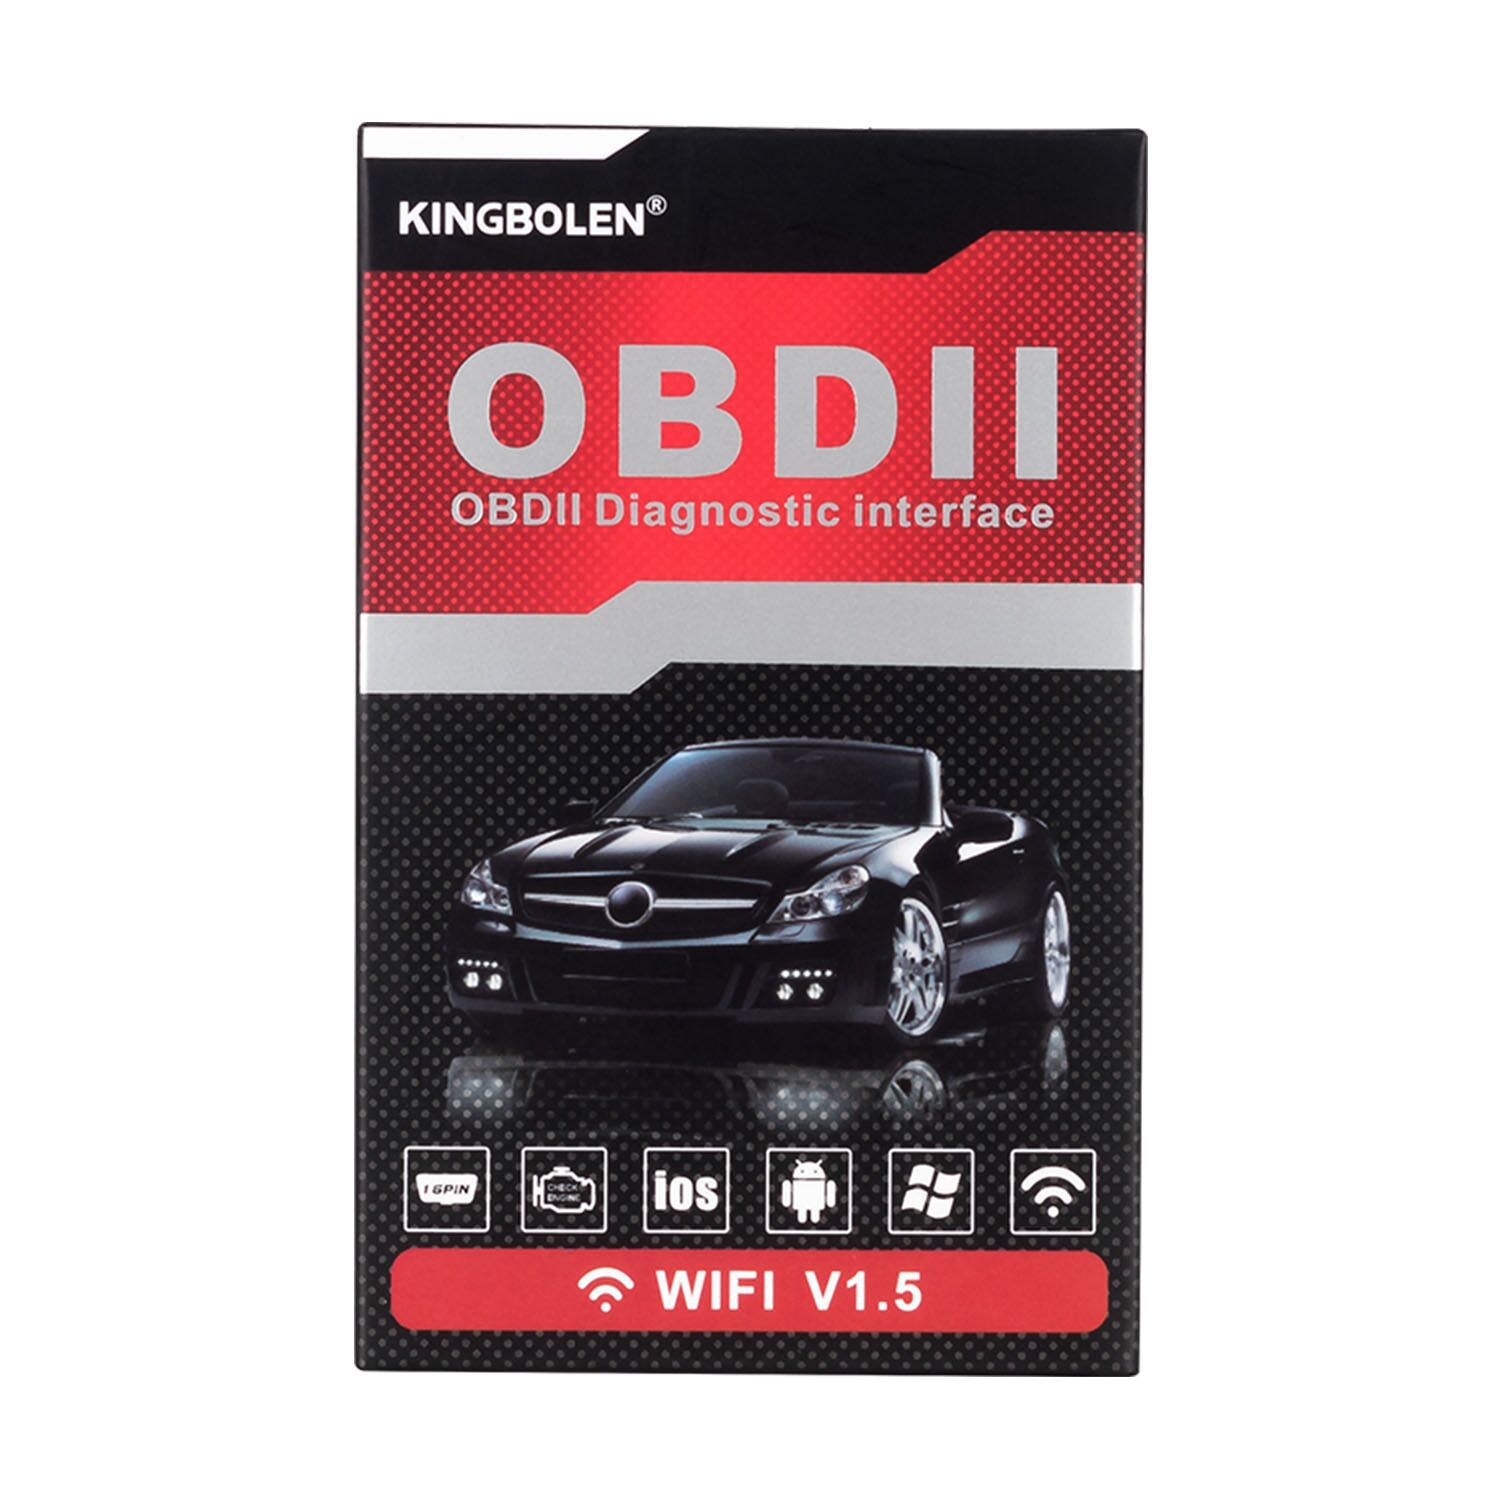 High quality OBD II ELM327 WIFI car fault diagnosis inst